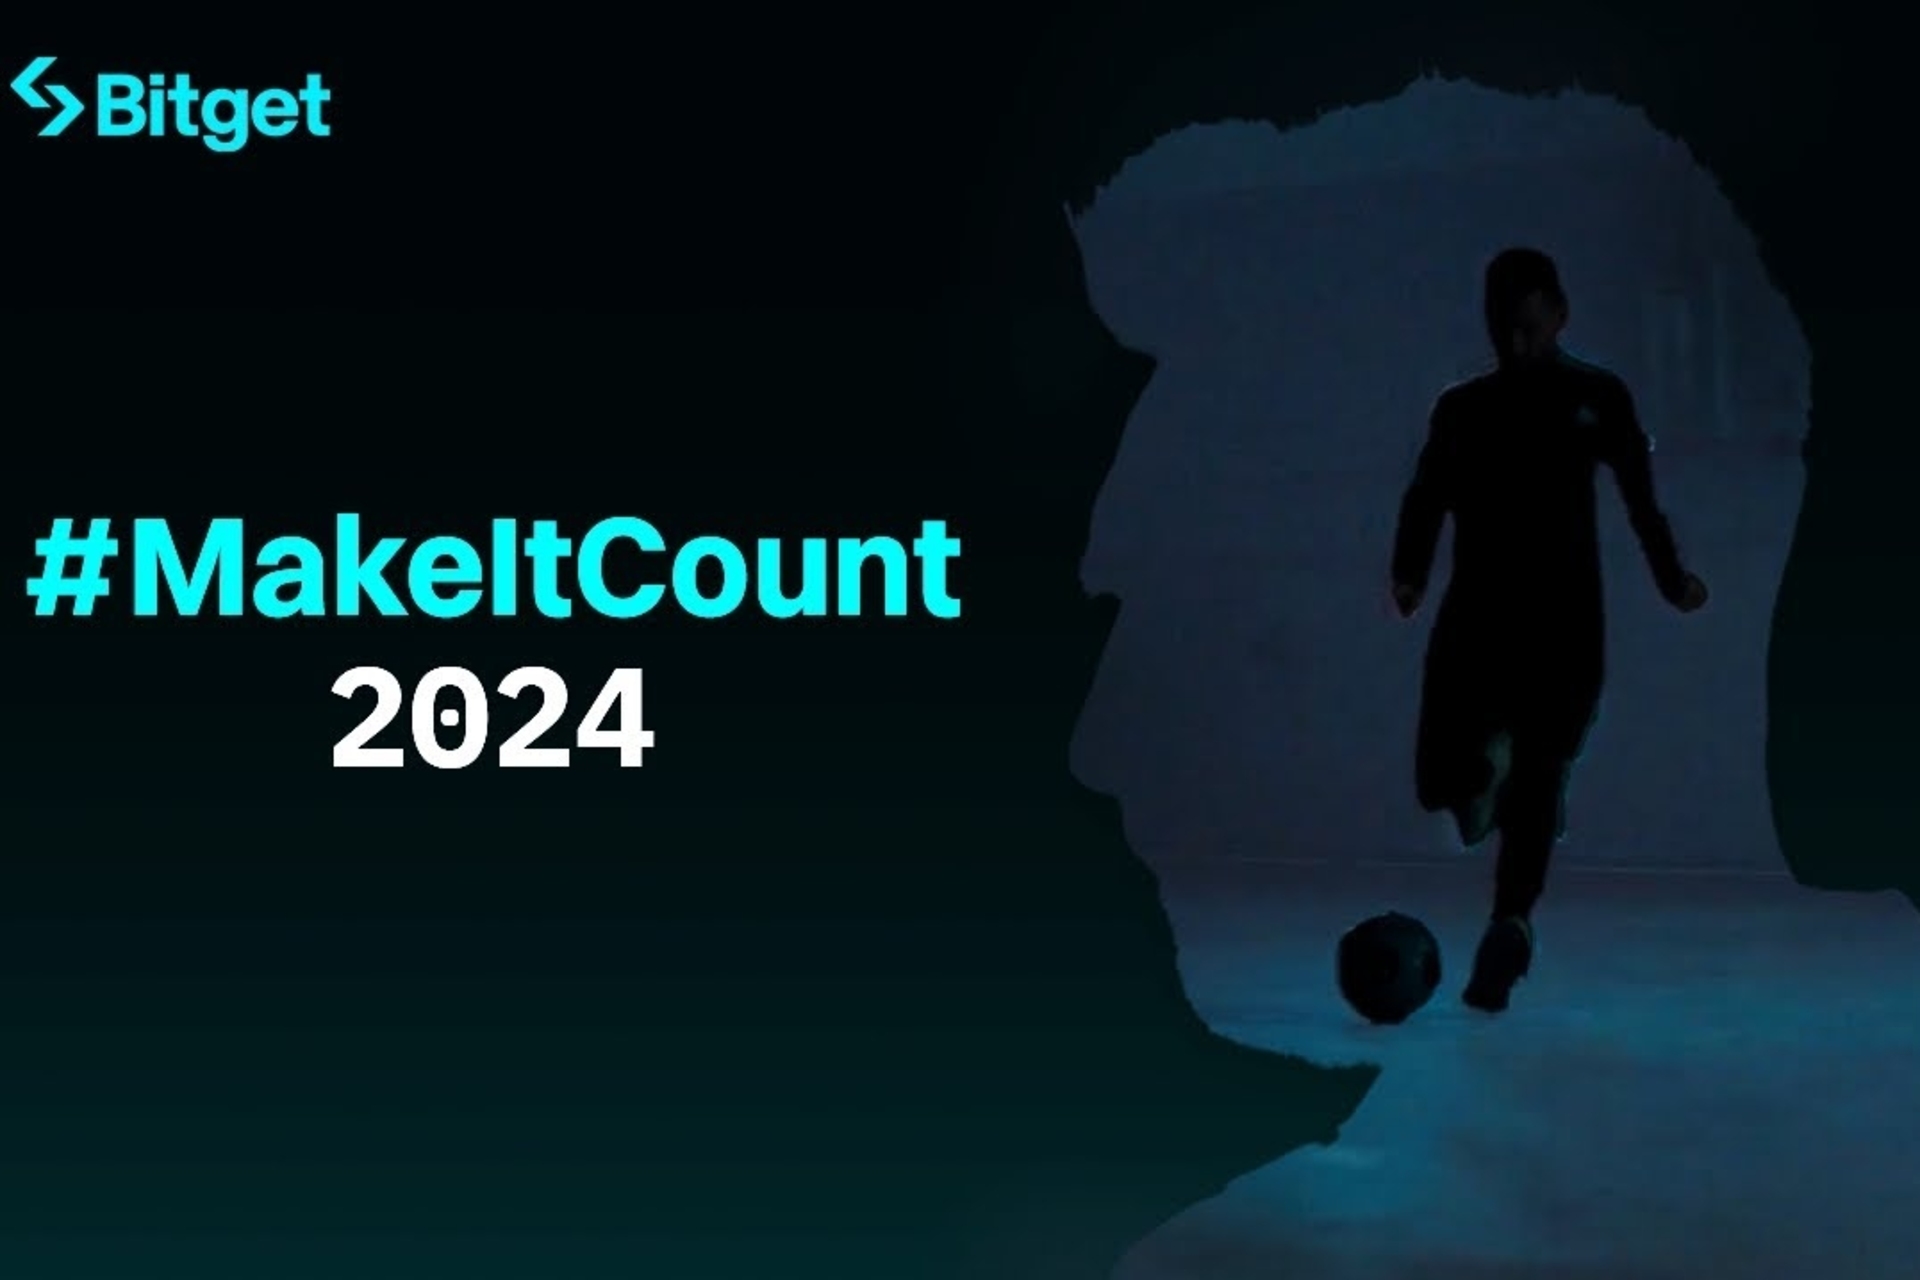 Lionel Messi: film #MakeItCount 2024 symbolizuje základní hodnoty sdílené kryptoburzou Bitget a argentinským fotbalistou